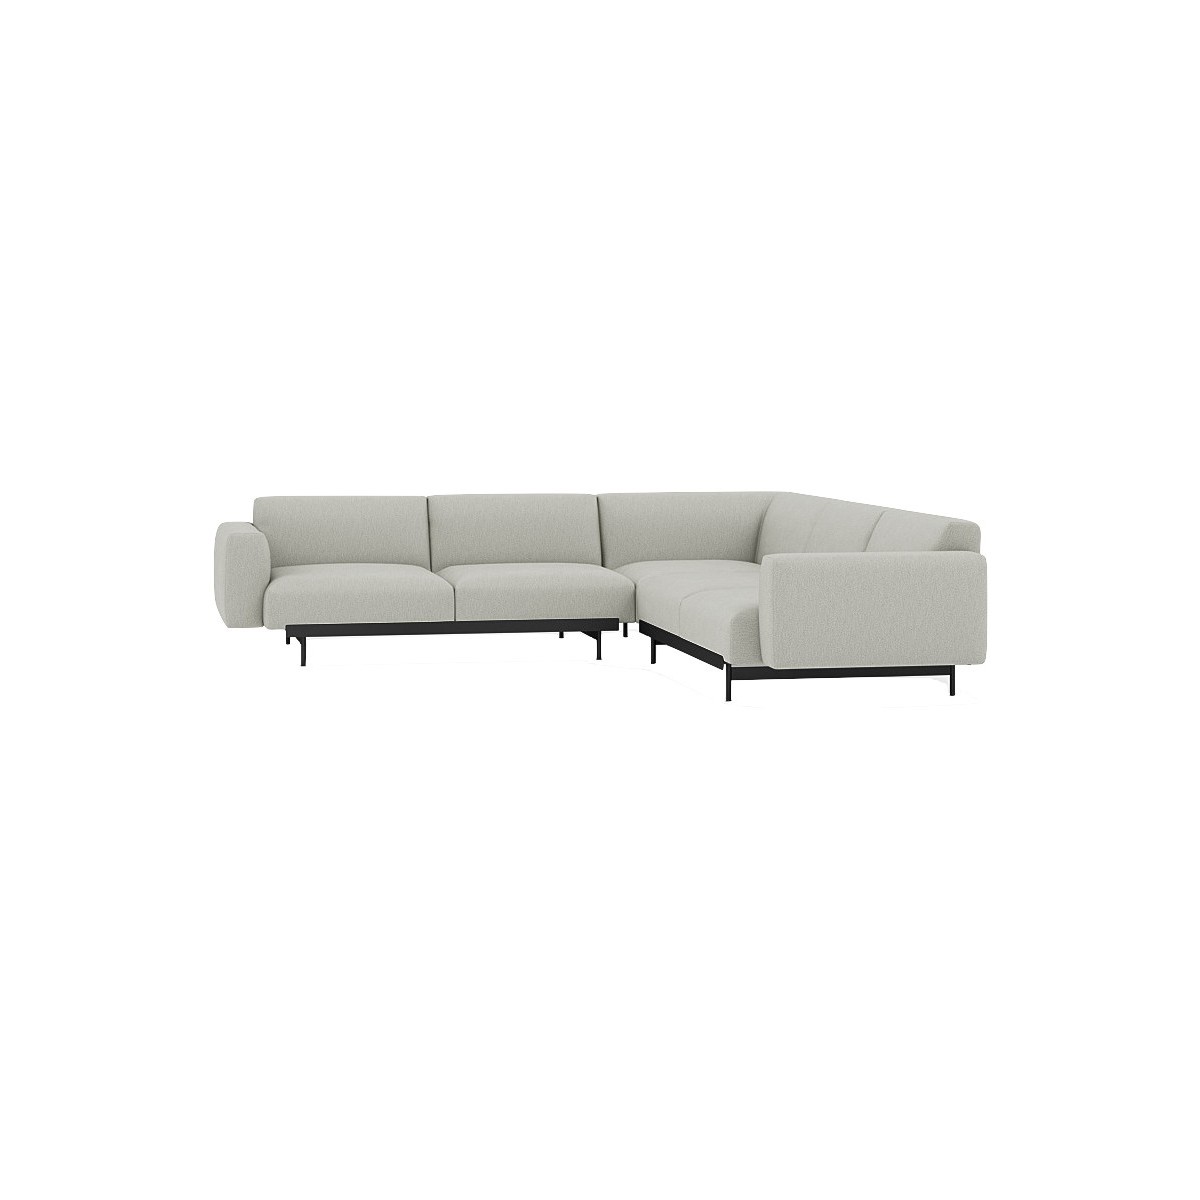 Clay 12 / black – In Situ corner sofa / configuration 1 – 287 x 287 cm